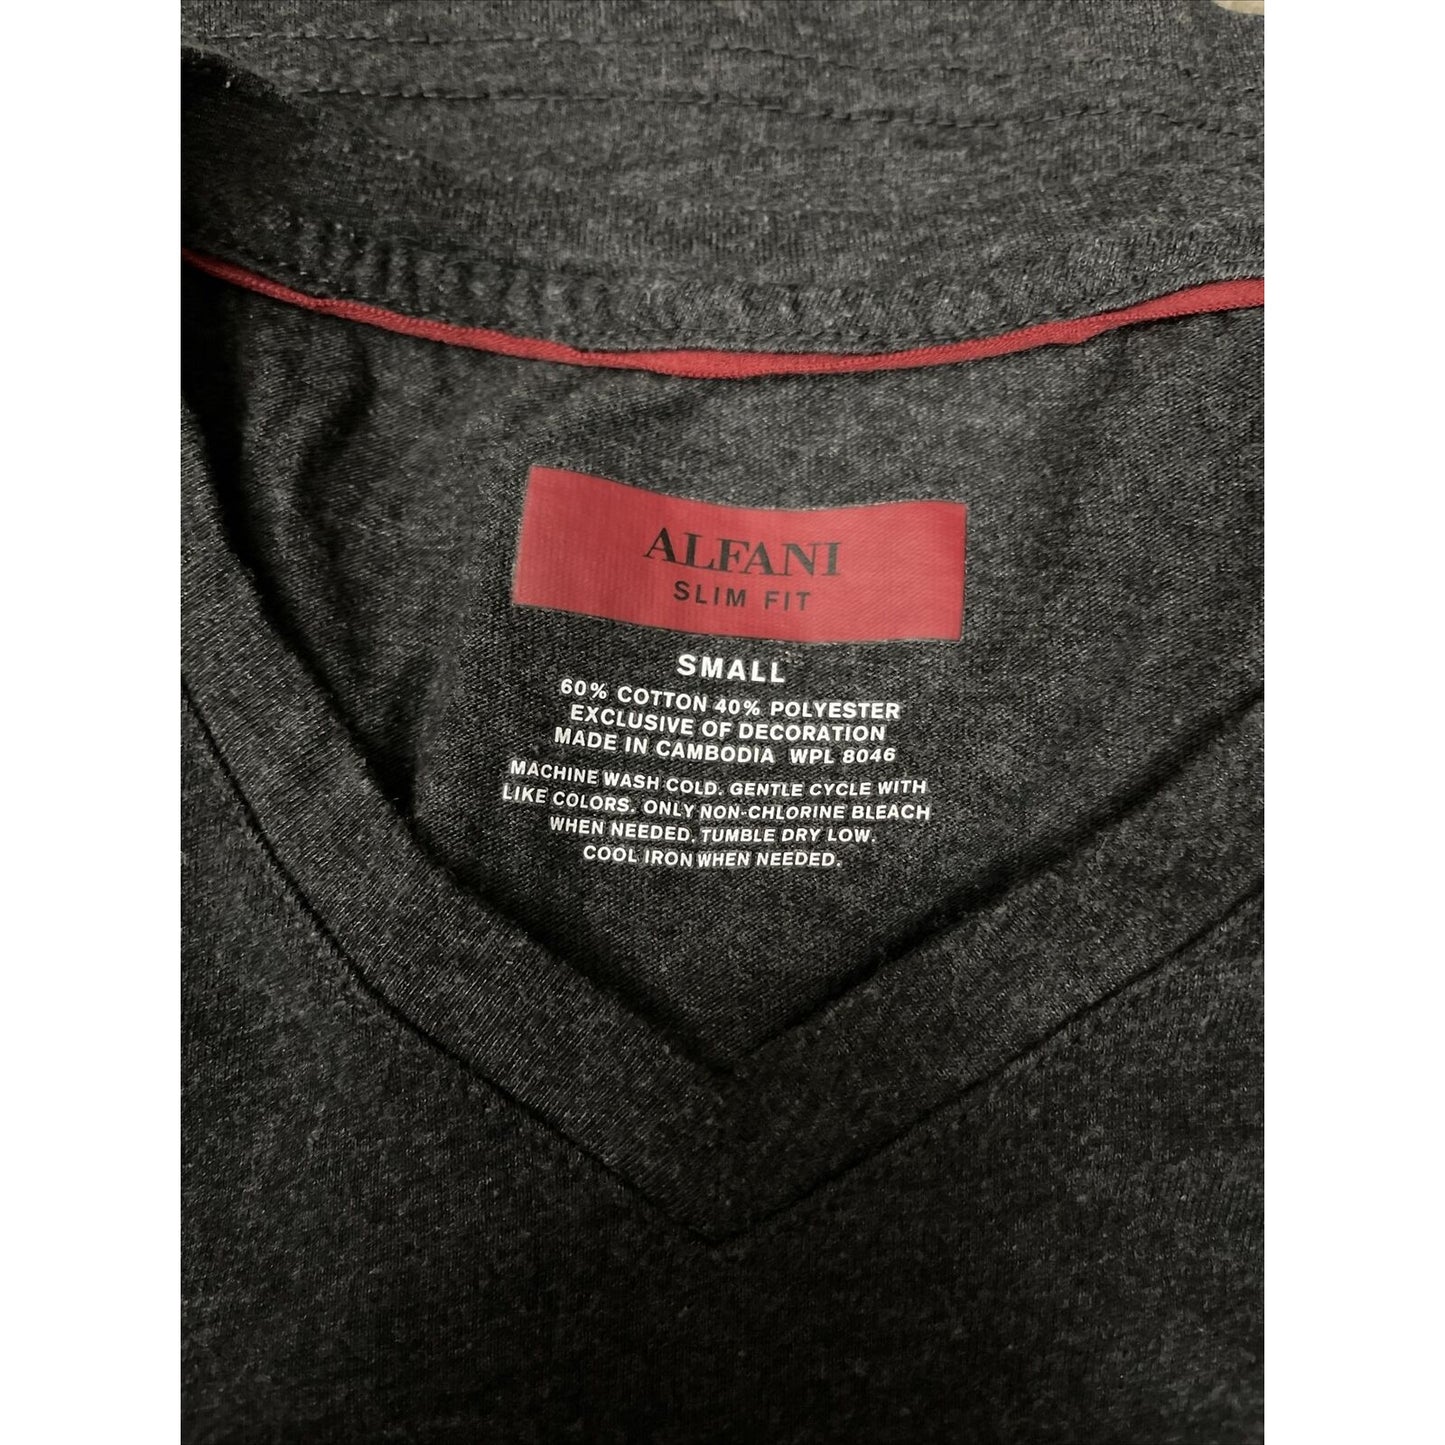 Alfani Men's Slim Fit Tee Shirt Small Cotton Polyester Charcoal Gray V-Neck